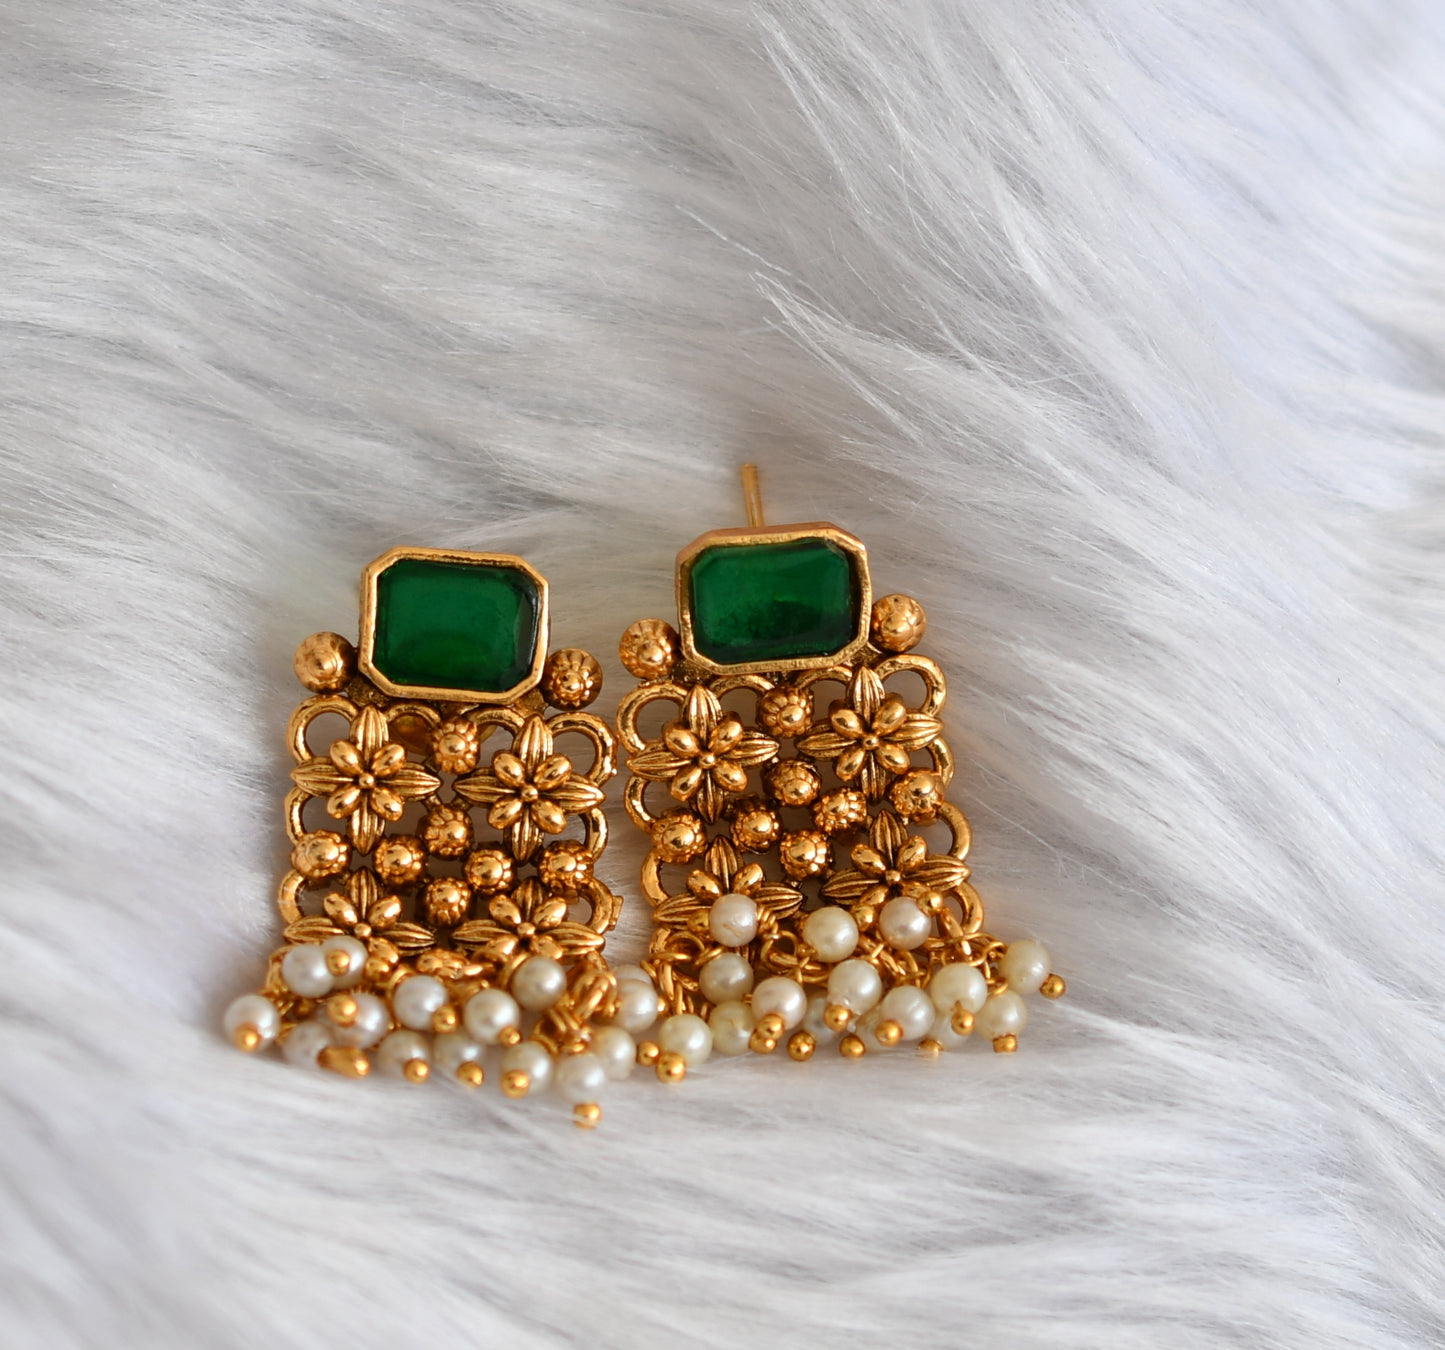 Antique gold tone pearl cluster green block stone choker necklace set dj-38704